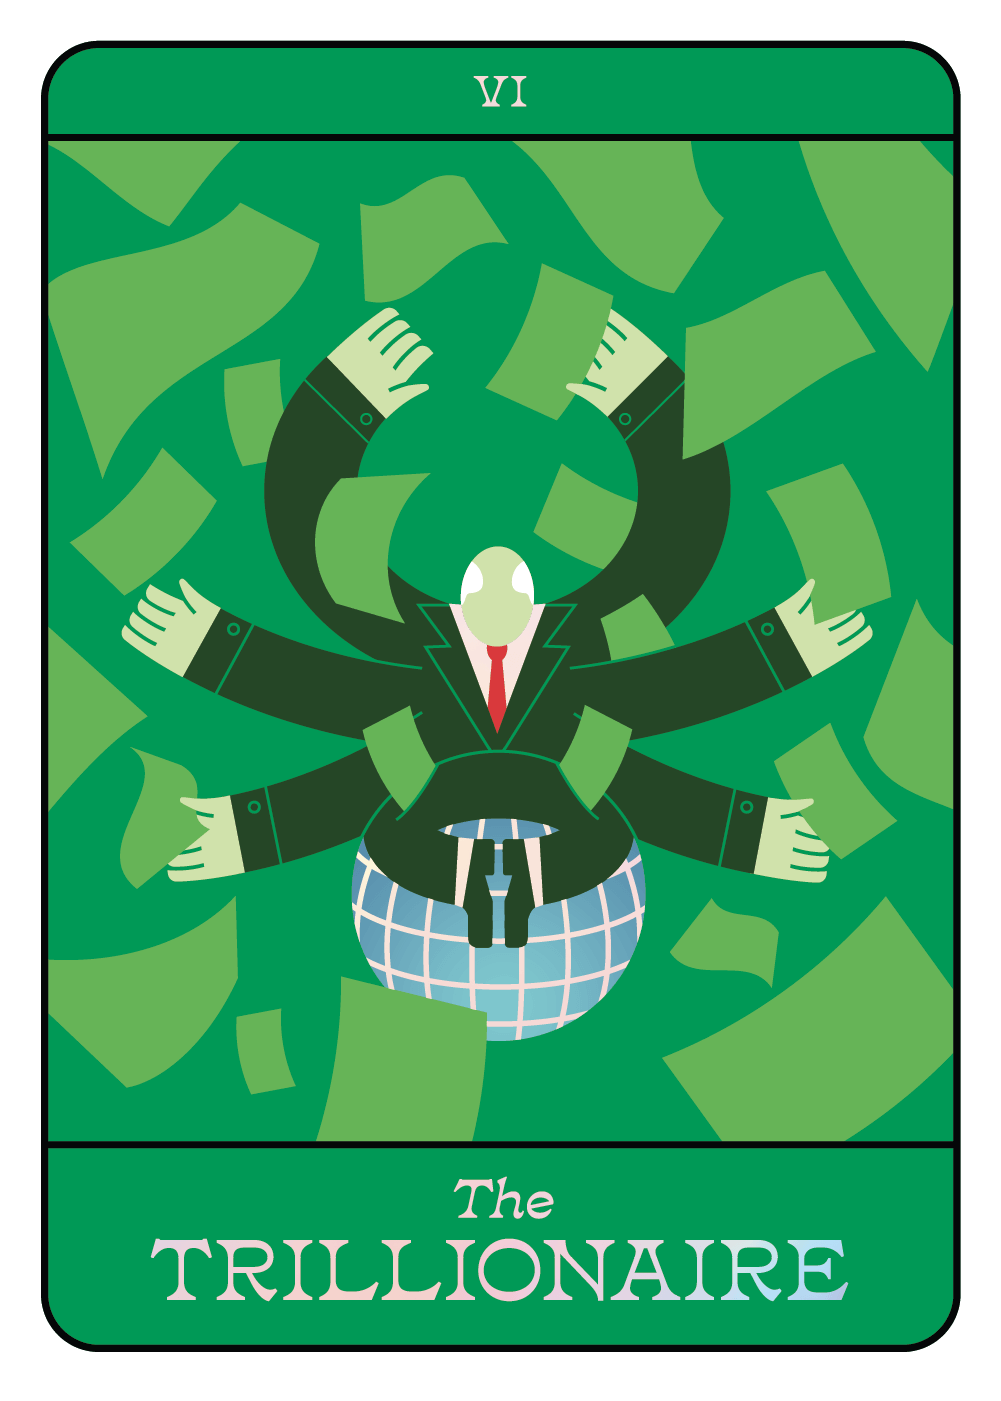 Illustration of the Trillionaire